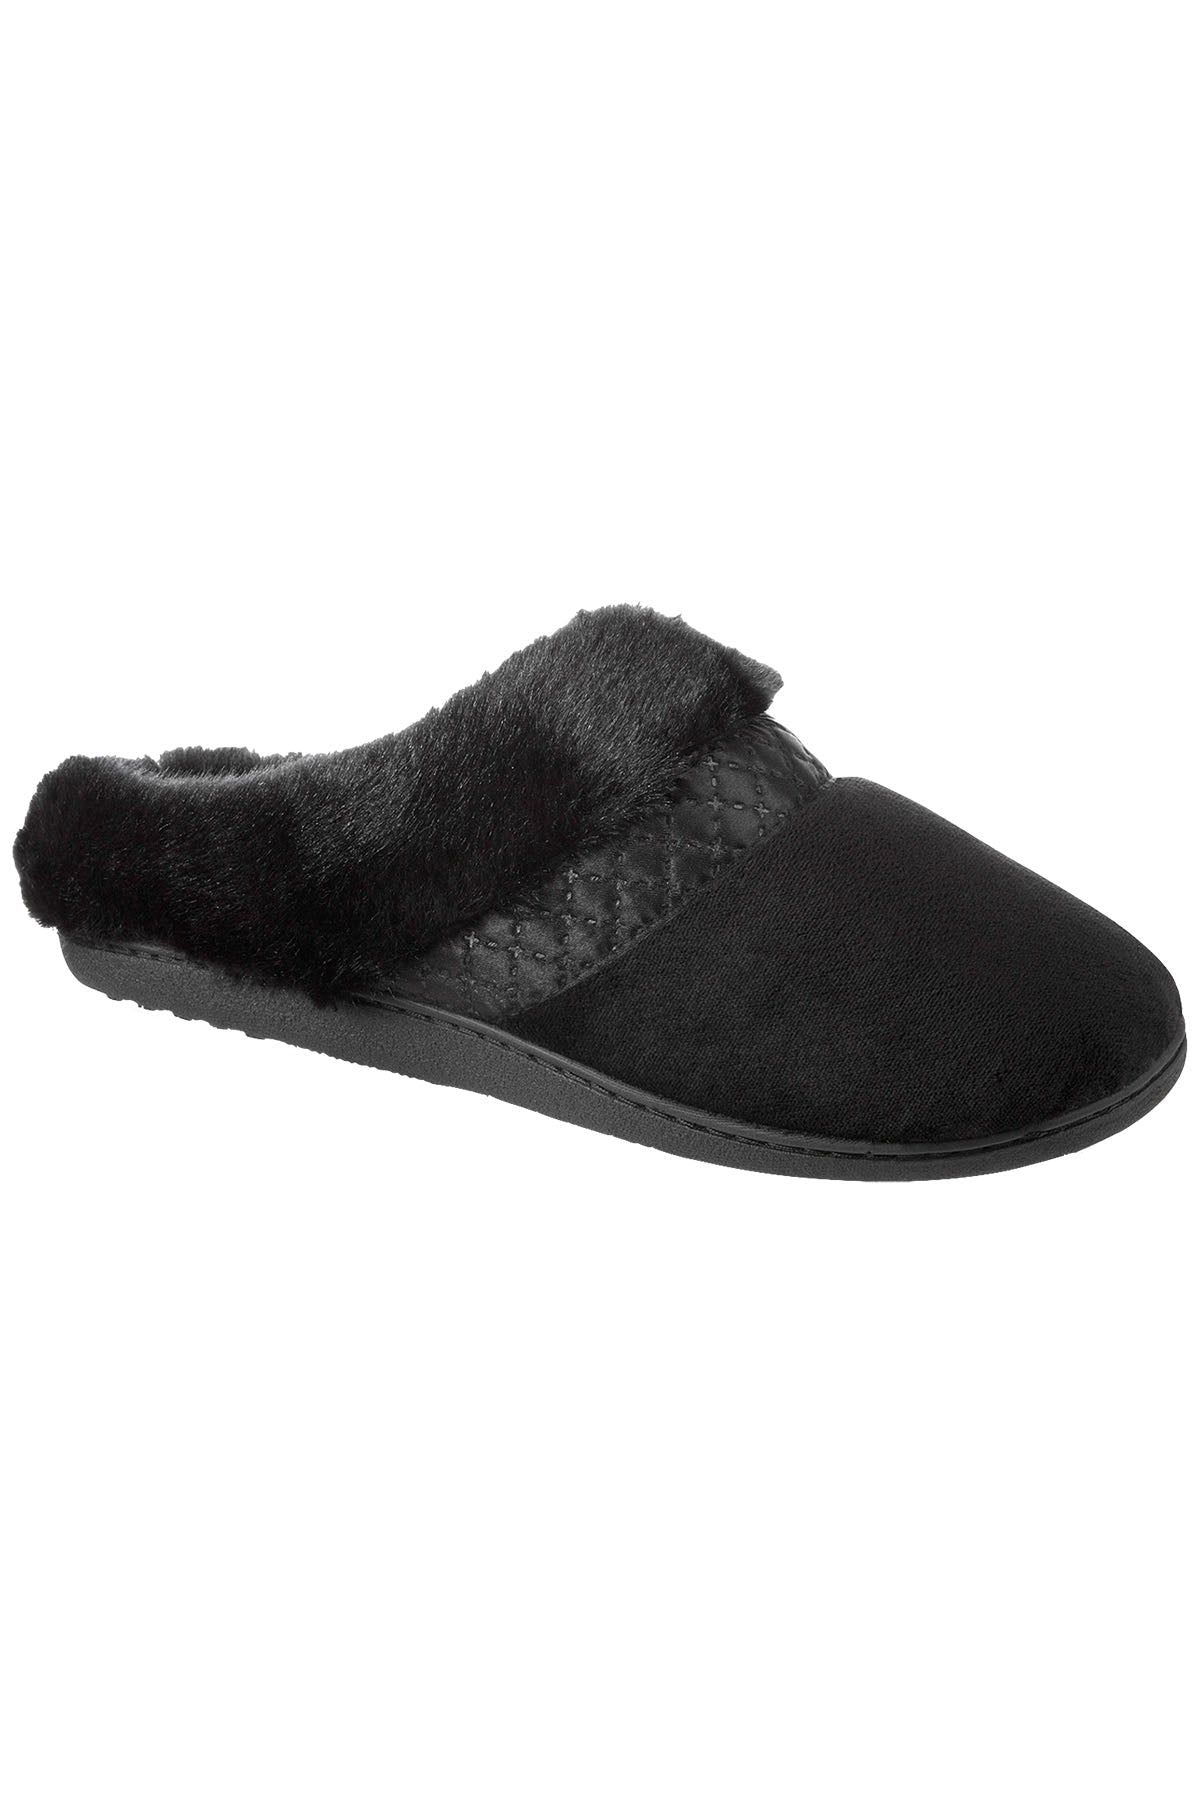 isotoner enhanced heel cushion slippers